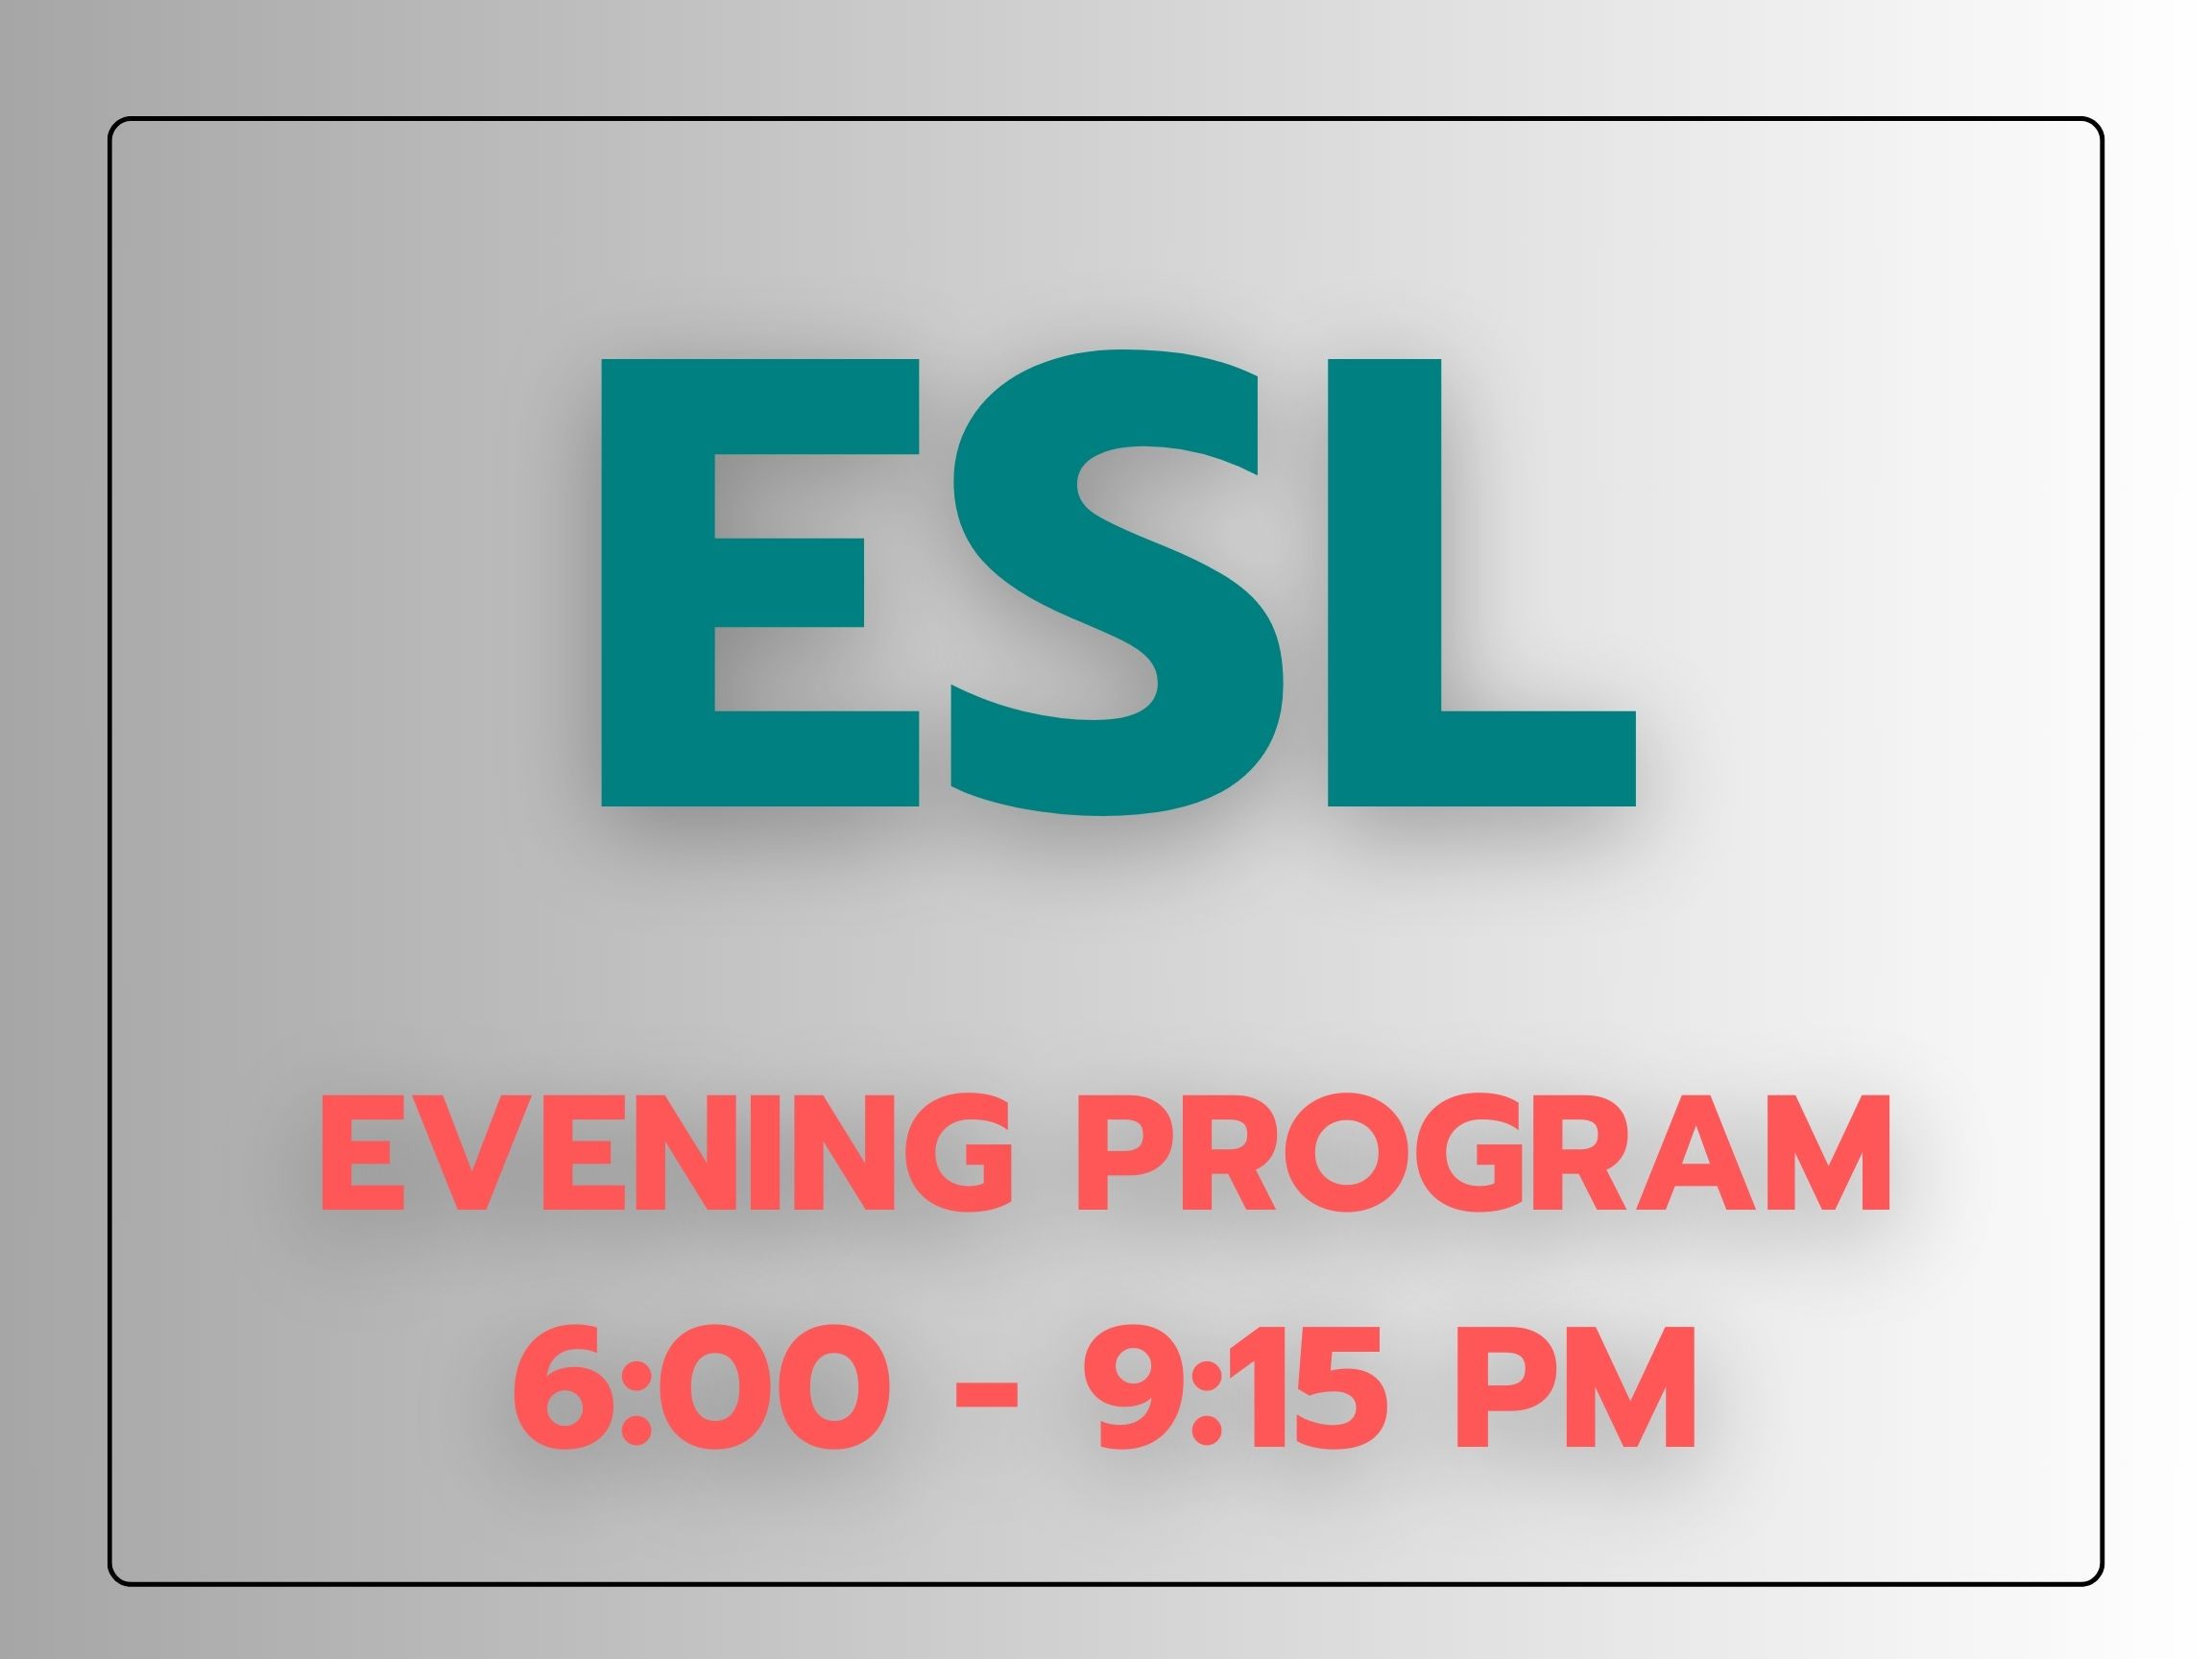 ESL Evening program information